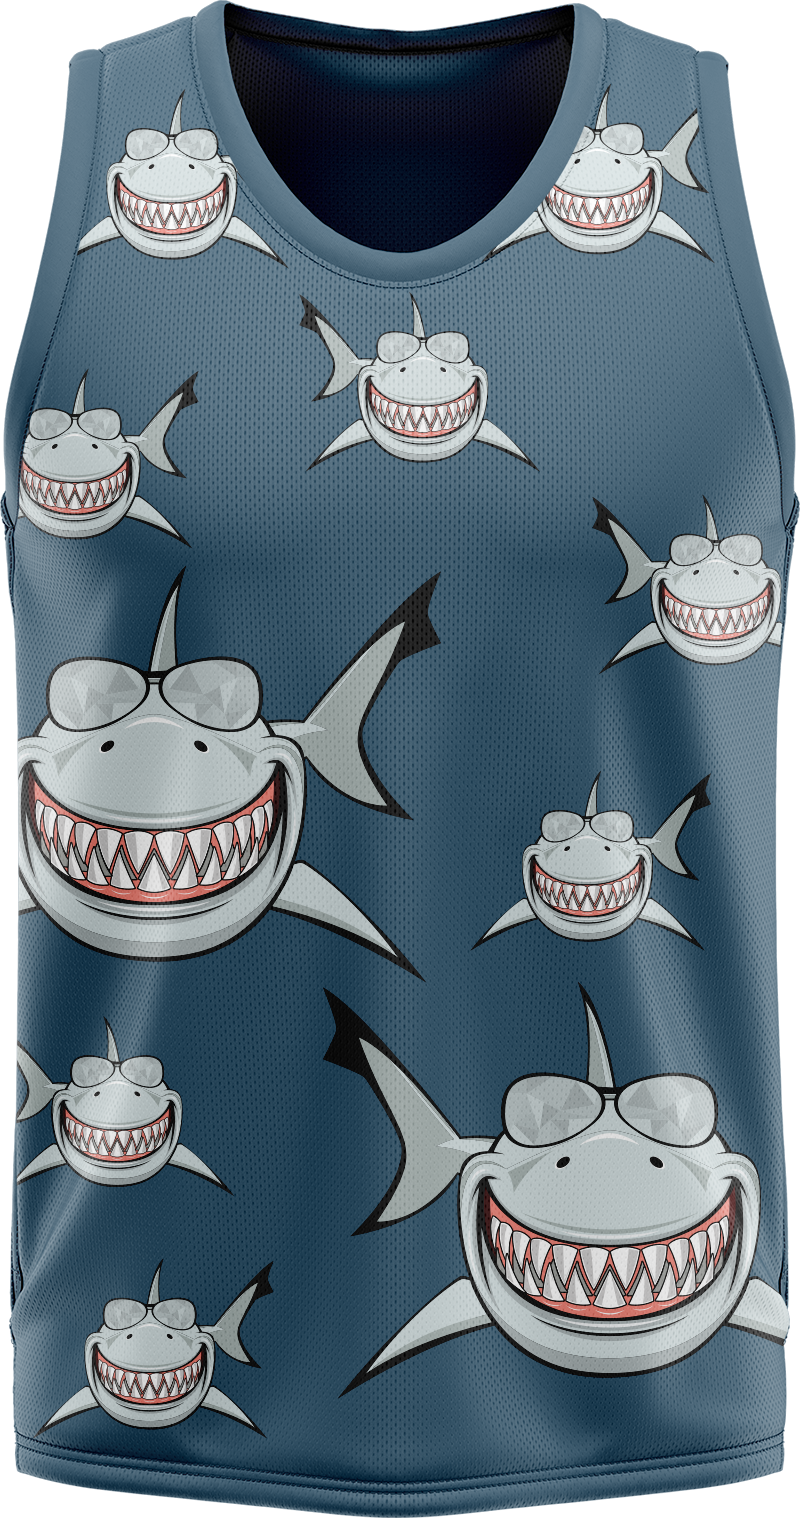 Snazzy Shark Basketball Jersey